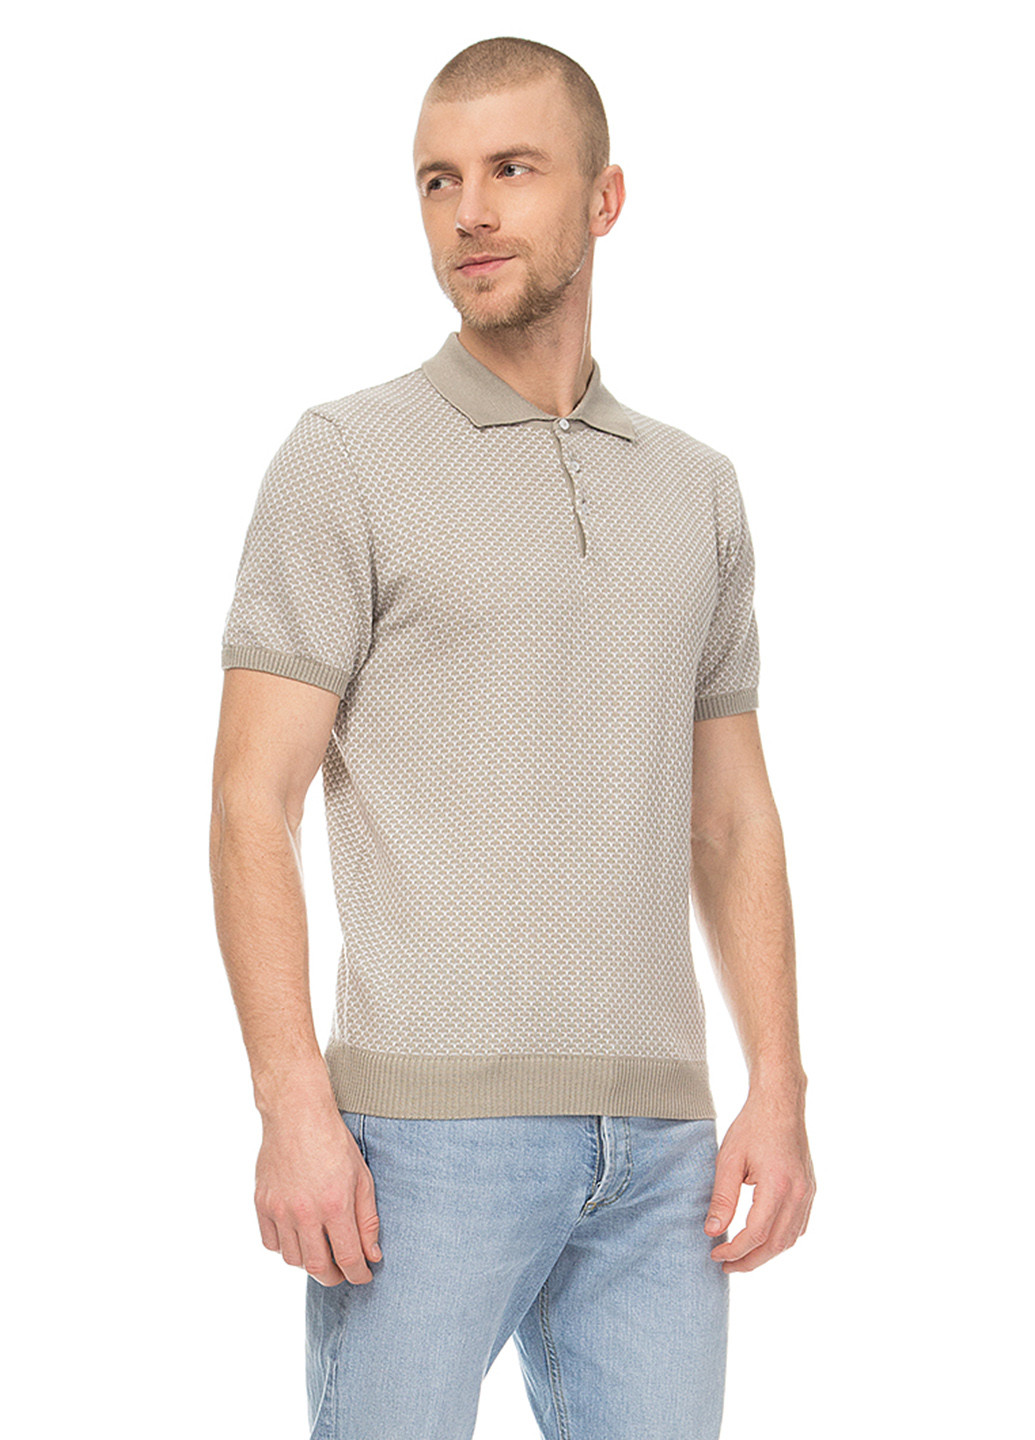 Светло-бежевая футболка-поло для мужчин VD One с геометрическим узором